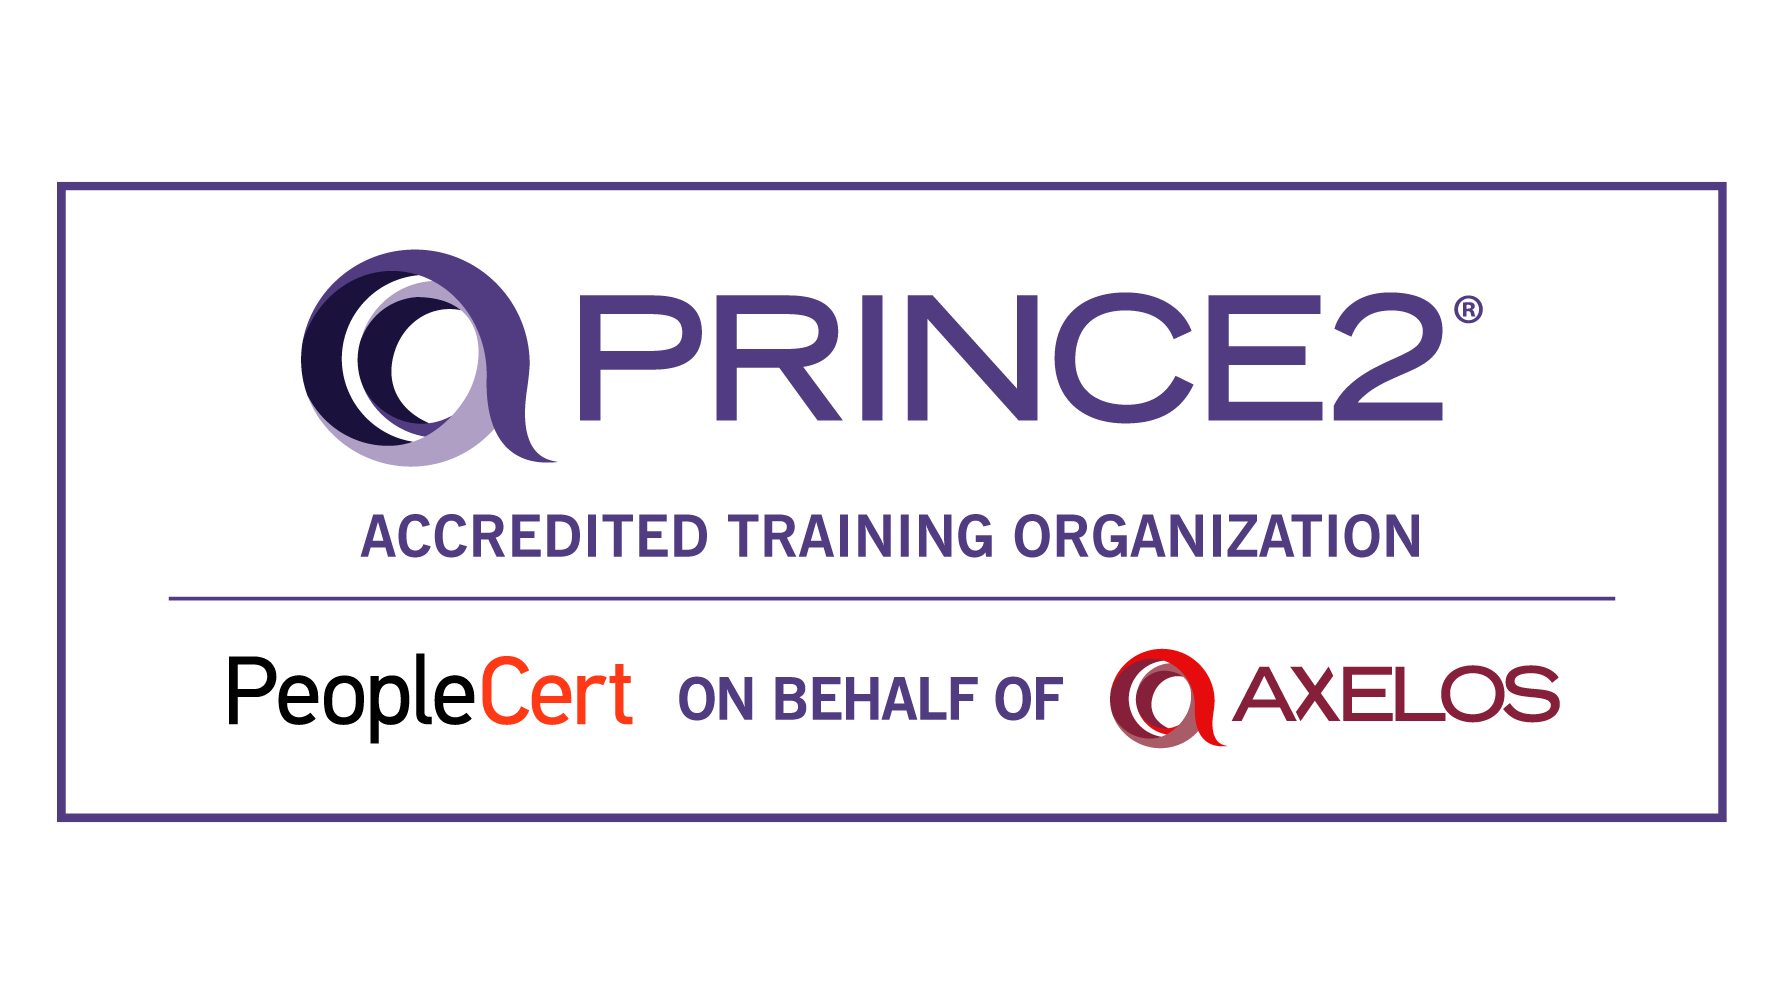 logo prince2